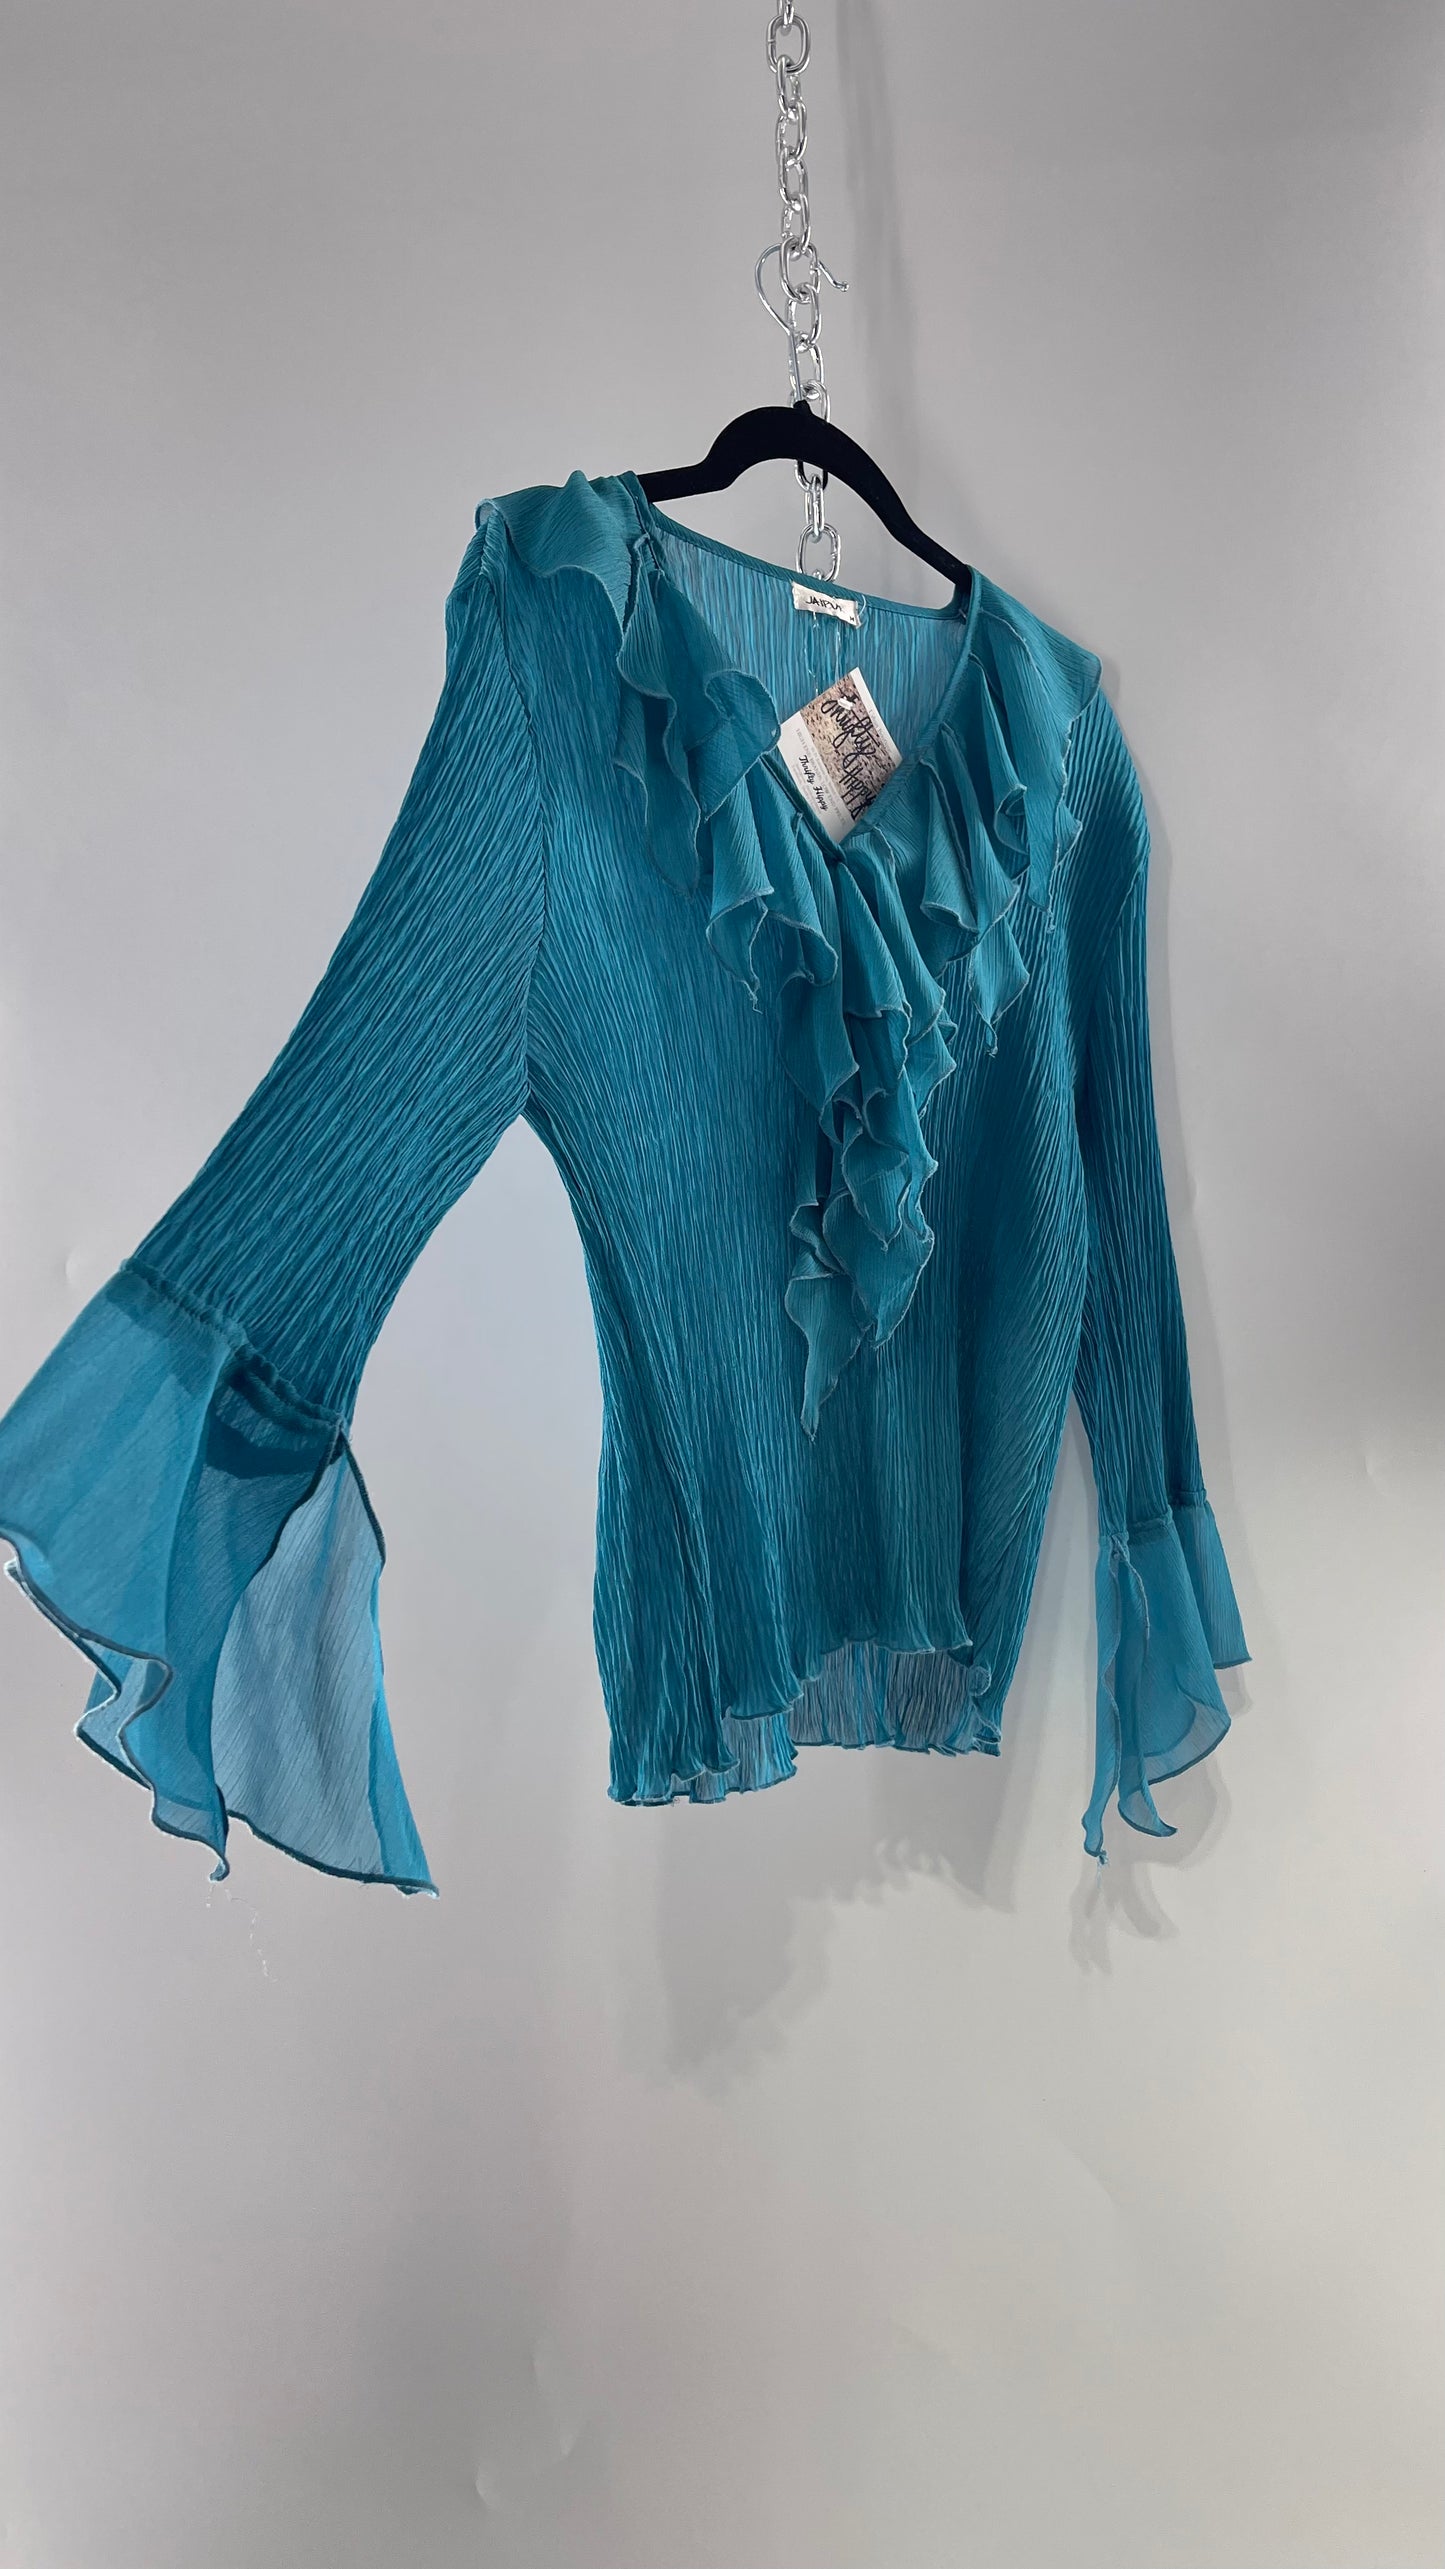 Vintage Jaipur Blue Crimped Blouse with Sheer Handkerchief Cuffs and Ruffled Neckline (Medium)